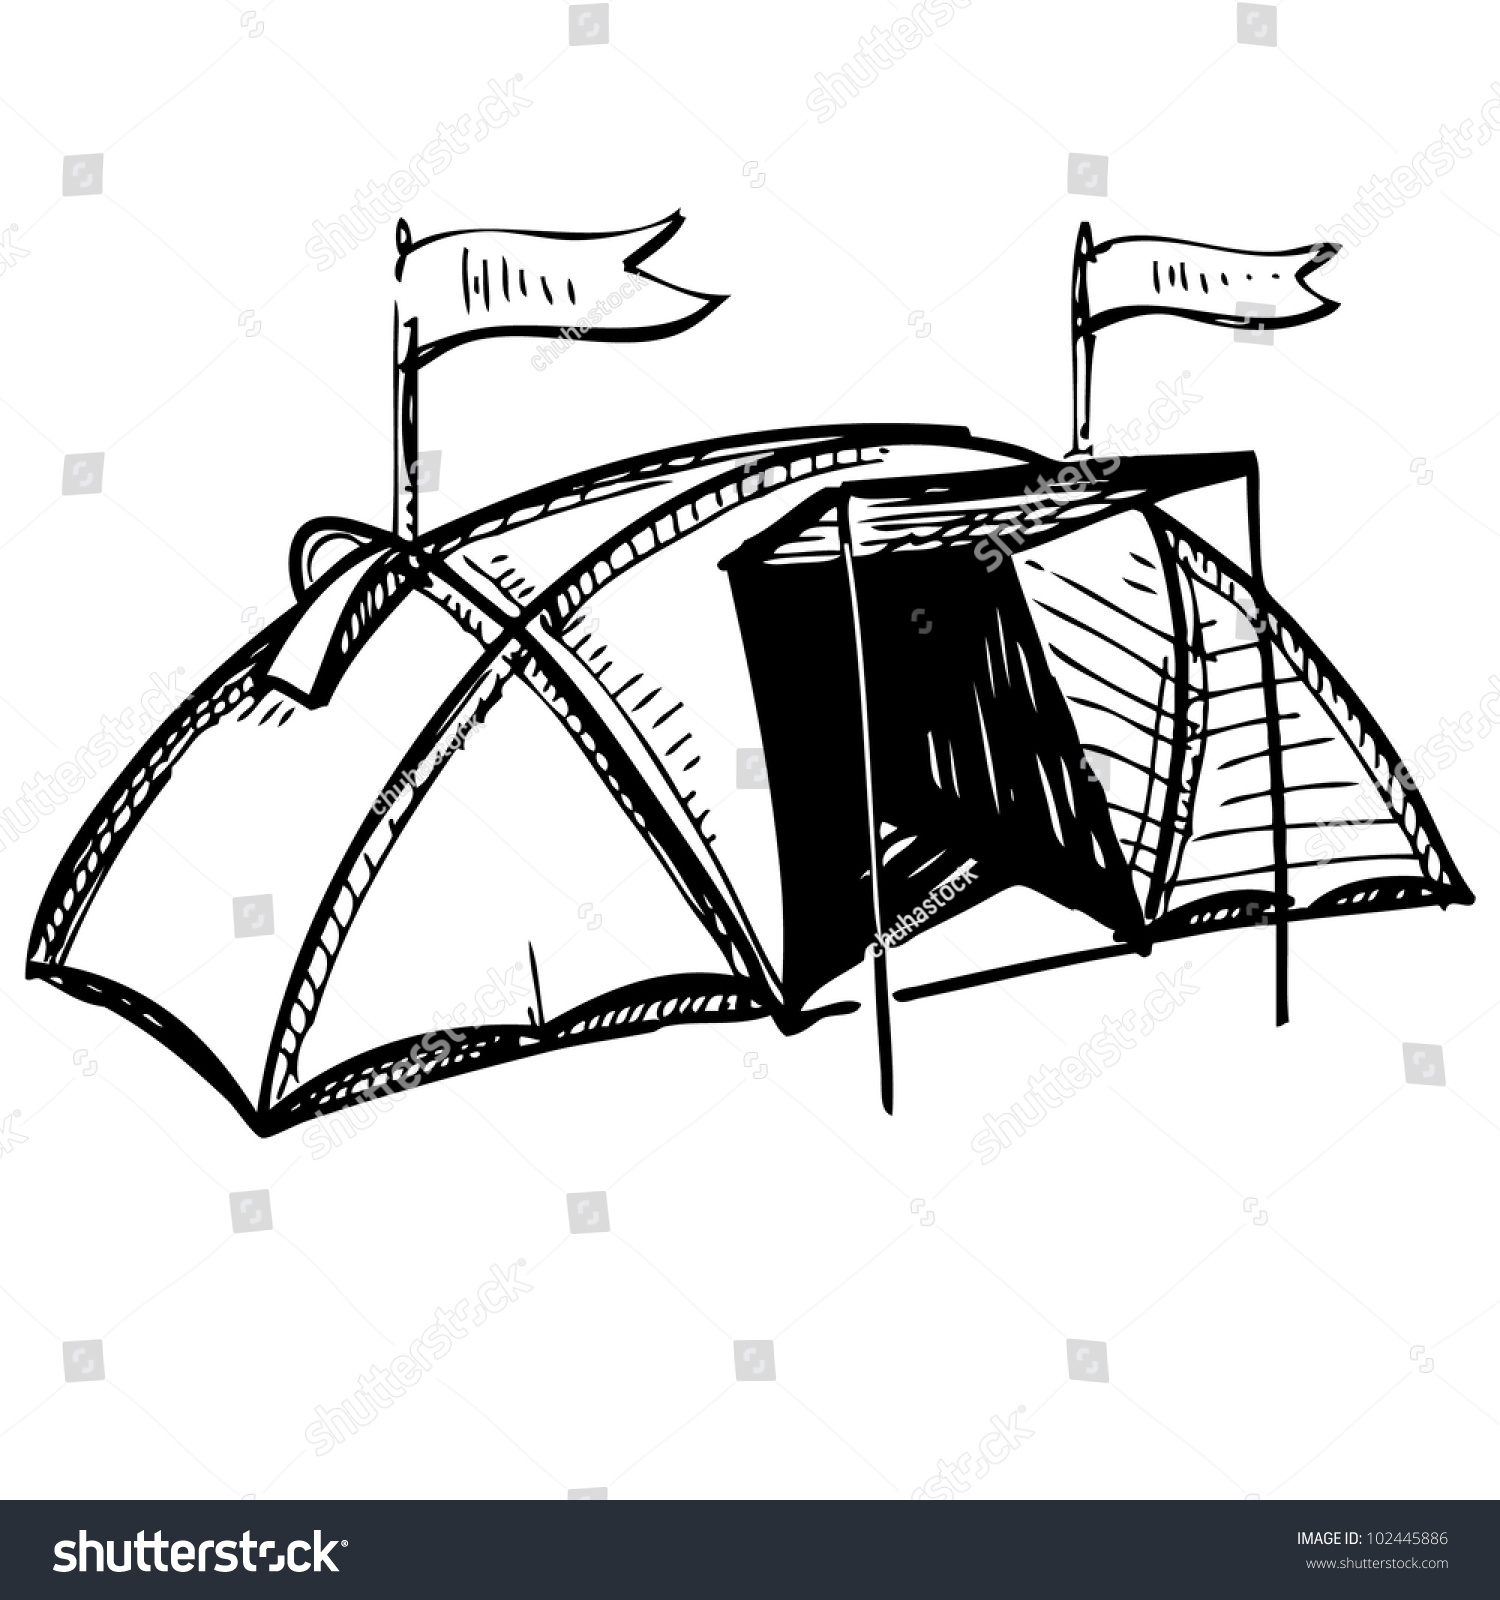 SVG of Camping tent. Hand drawing sketch vector illustration svg